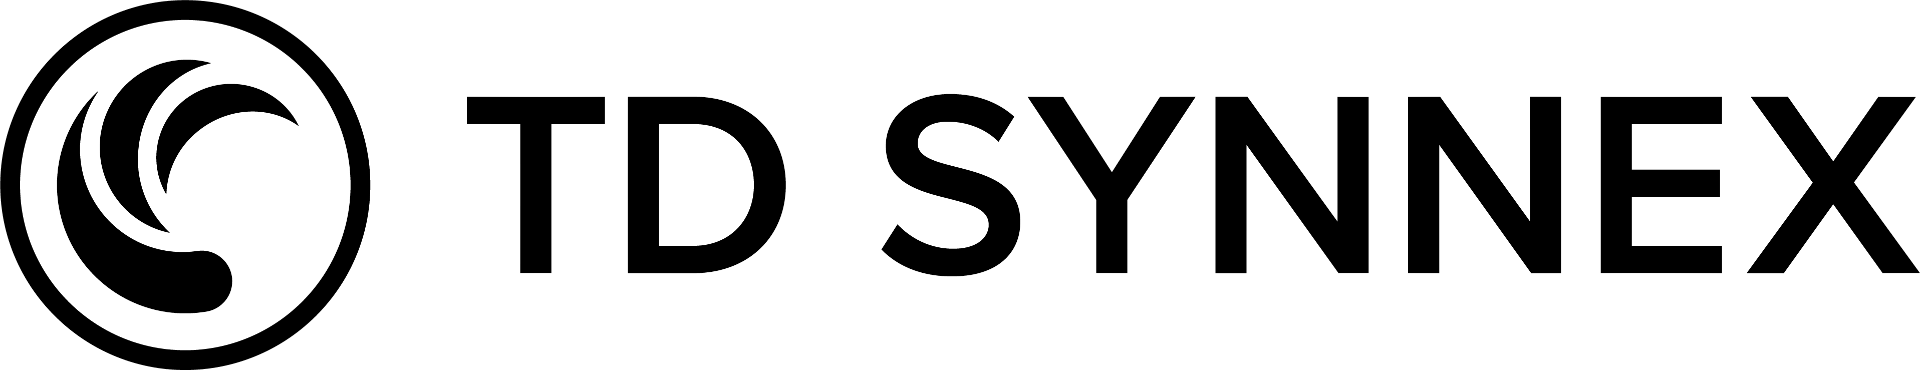 Td synnex logo black